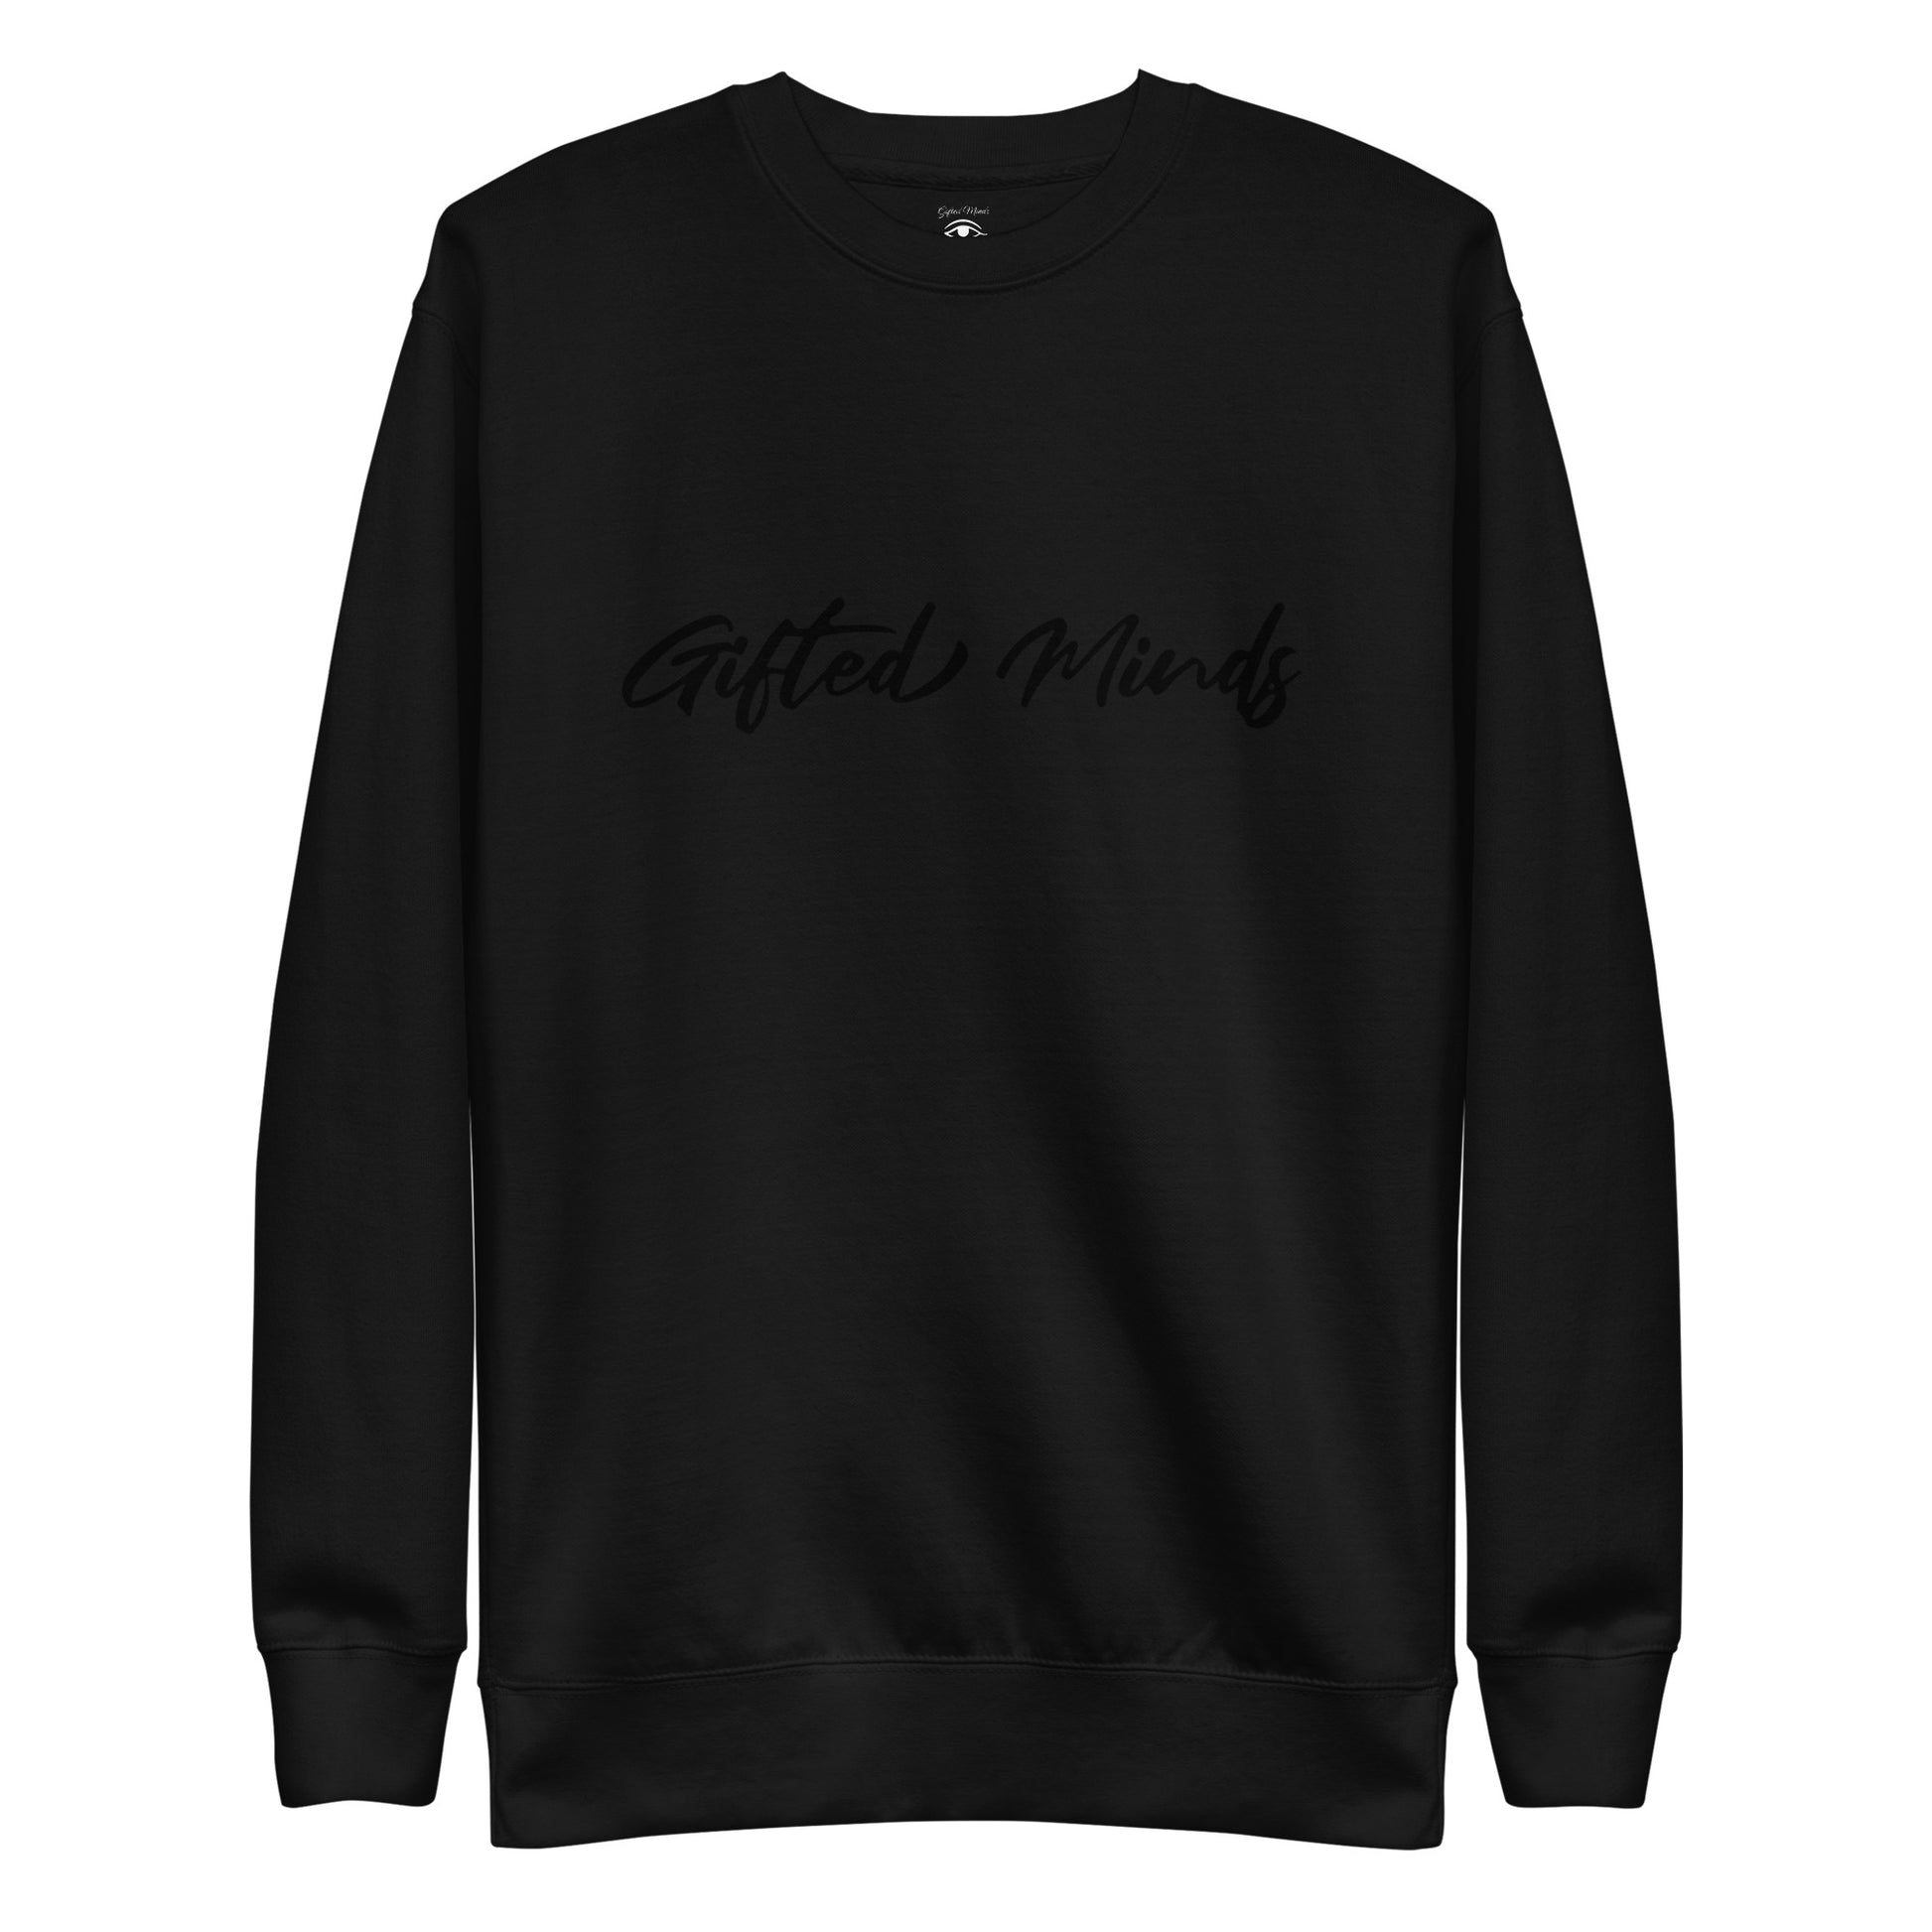 Gifted Minds Large Script Premium Sweatshirt - GFTD MNDS